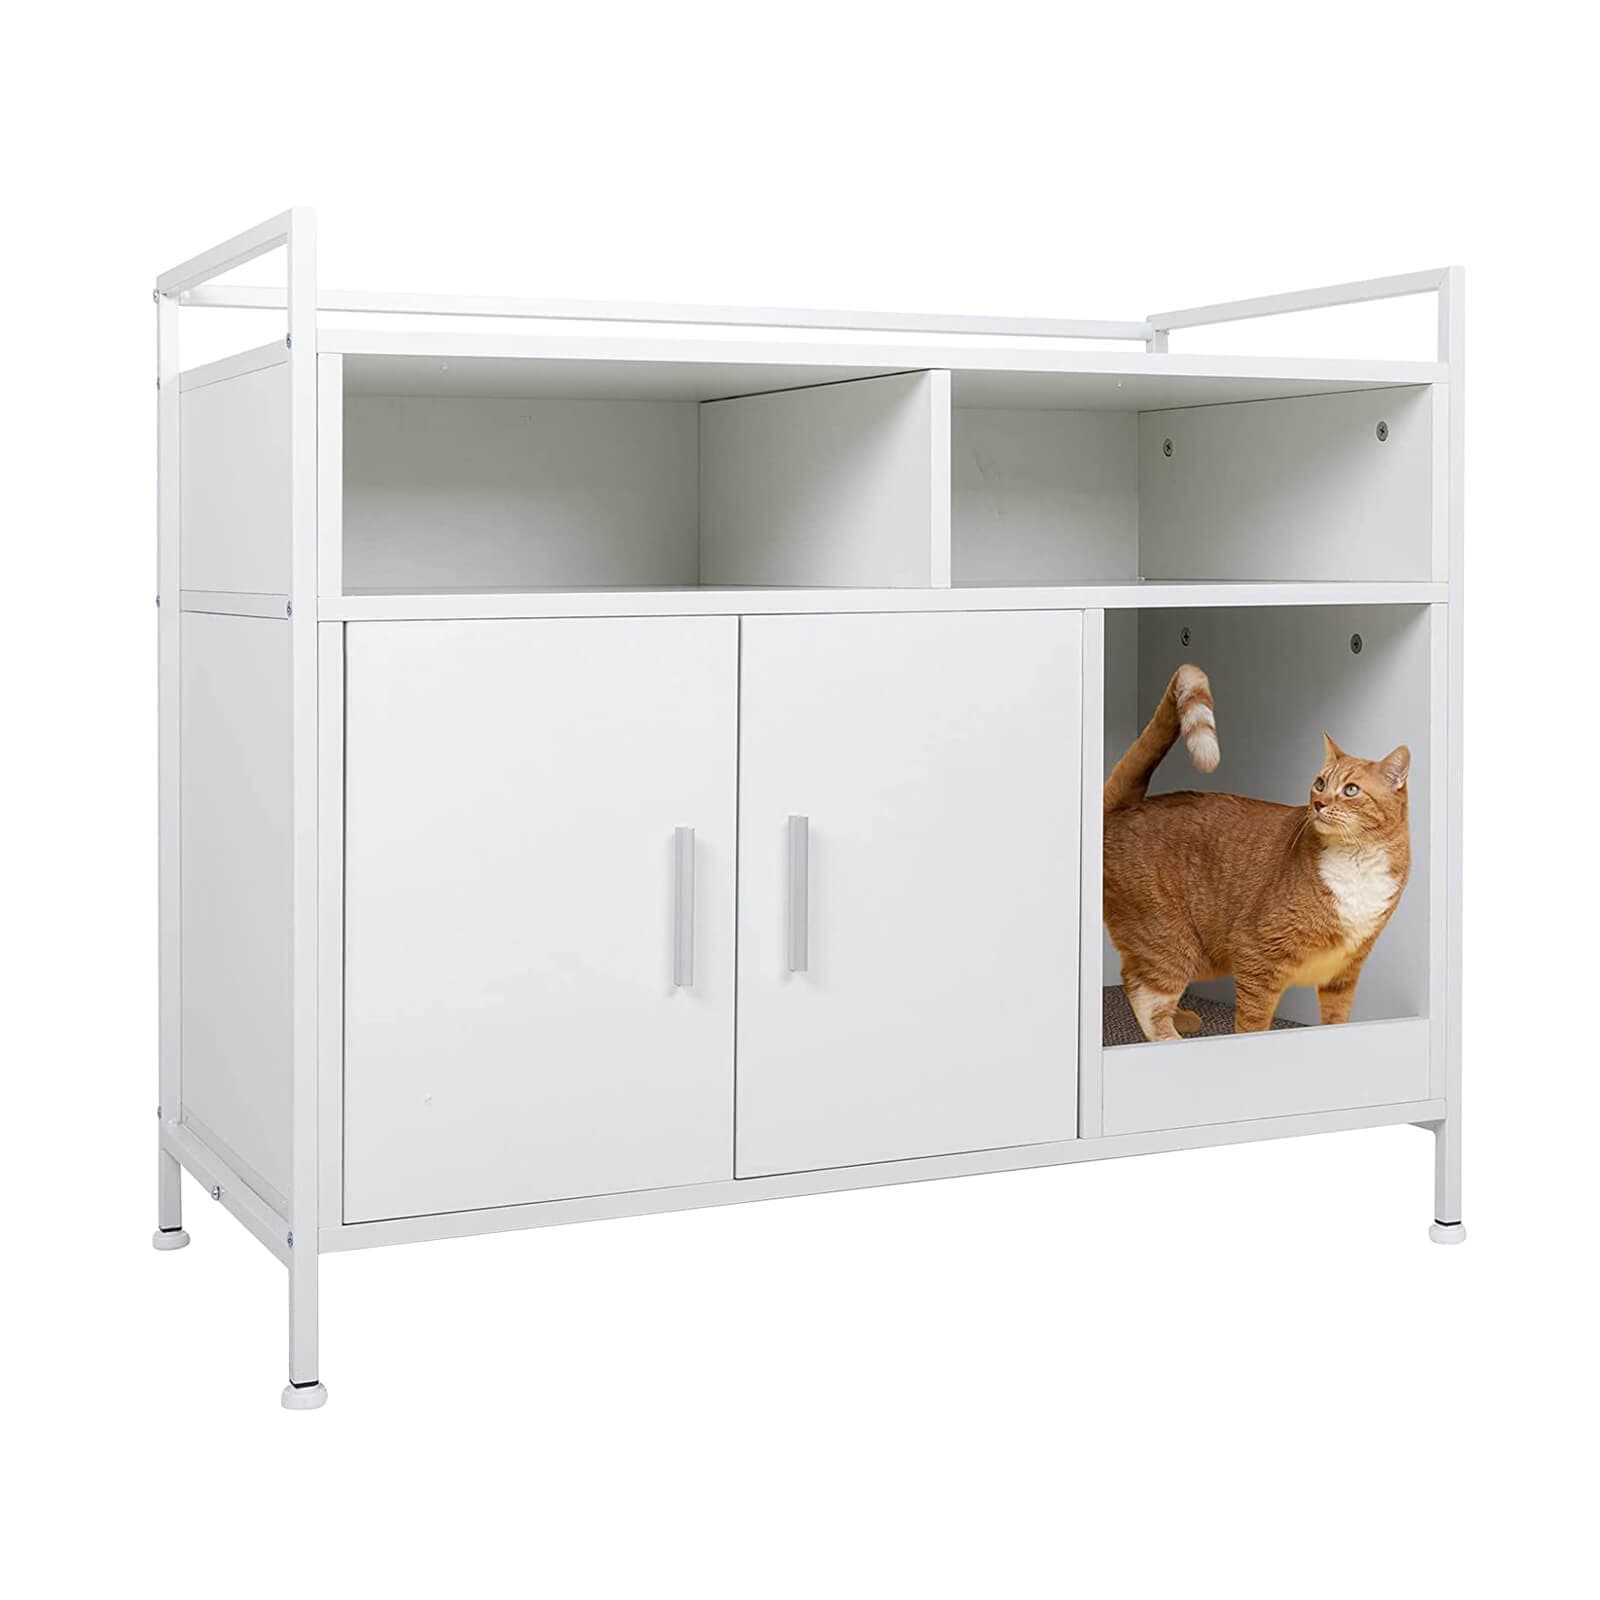 Elecwish White Cat Litter Box Storage Cabinet HW1193